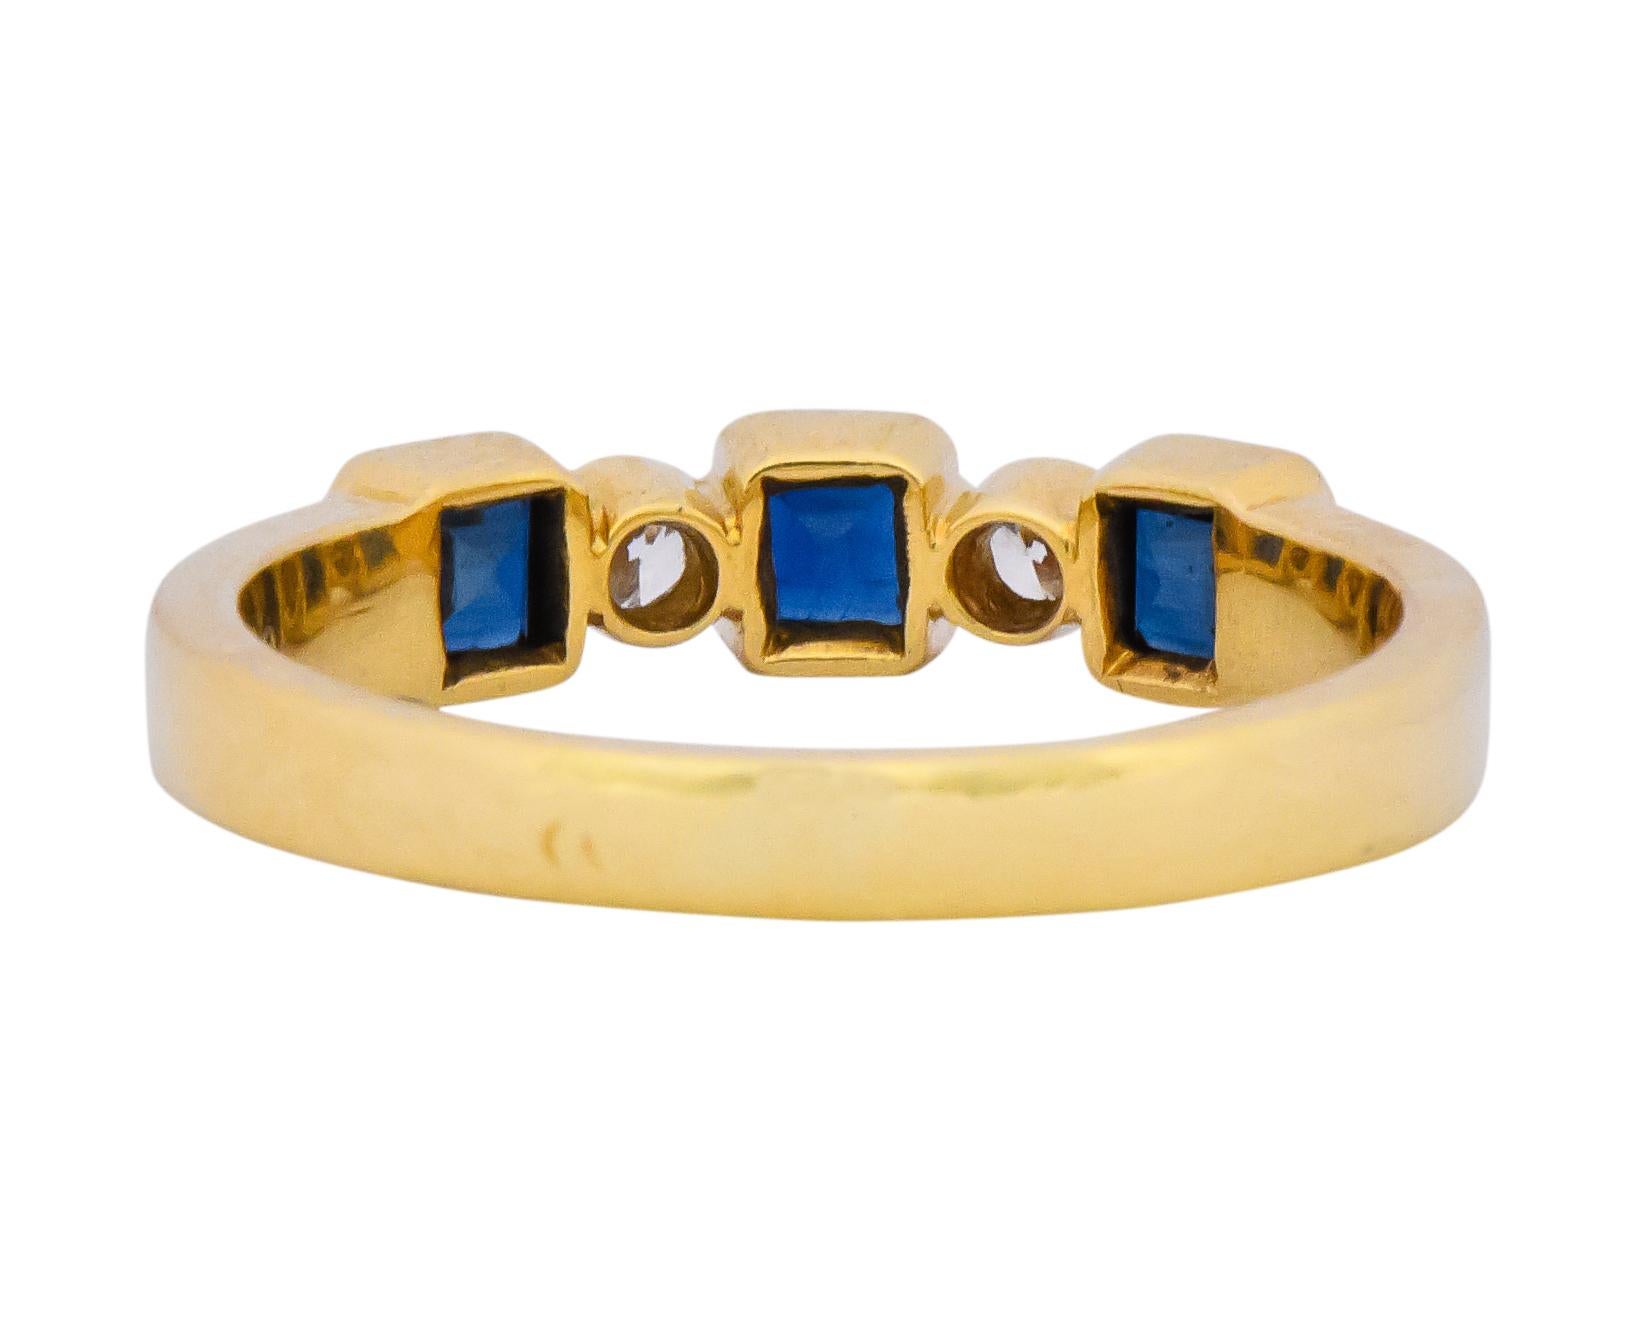 Round Cut Chaumet Paris Sapphire Diamond 18 Karat Gold Stacking Ring